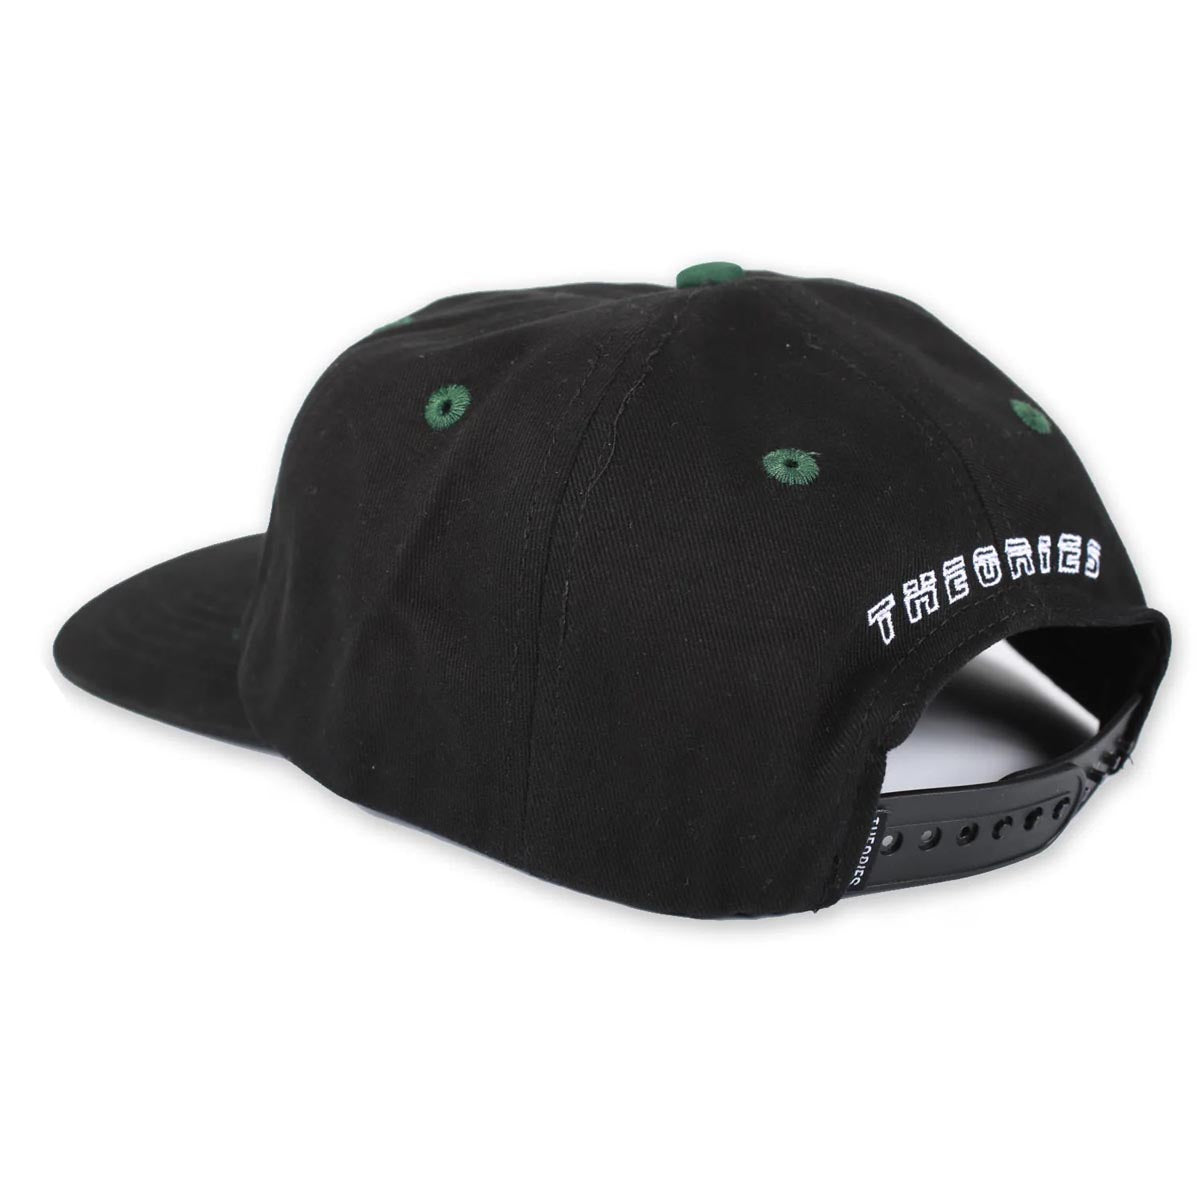 Theories Crosshairs Snapback Hat - Black/Green image 2